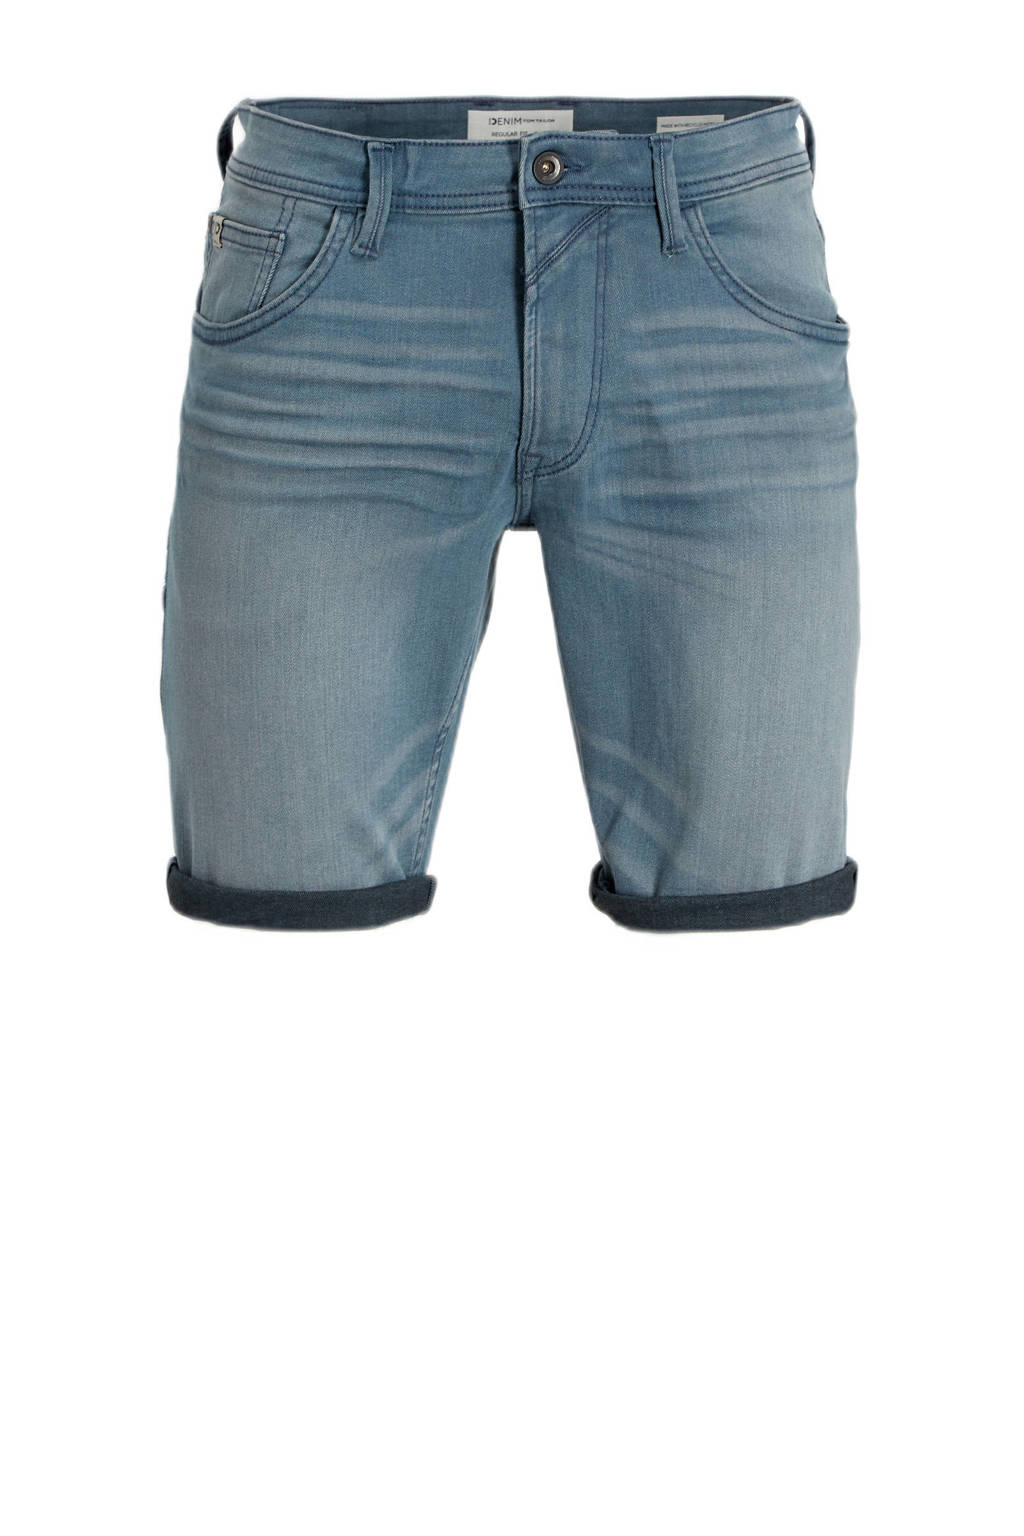 Tom Tailor Denim regular fit jeans short mid stone blue grey